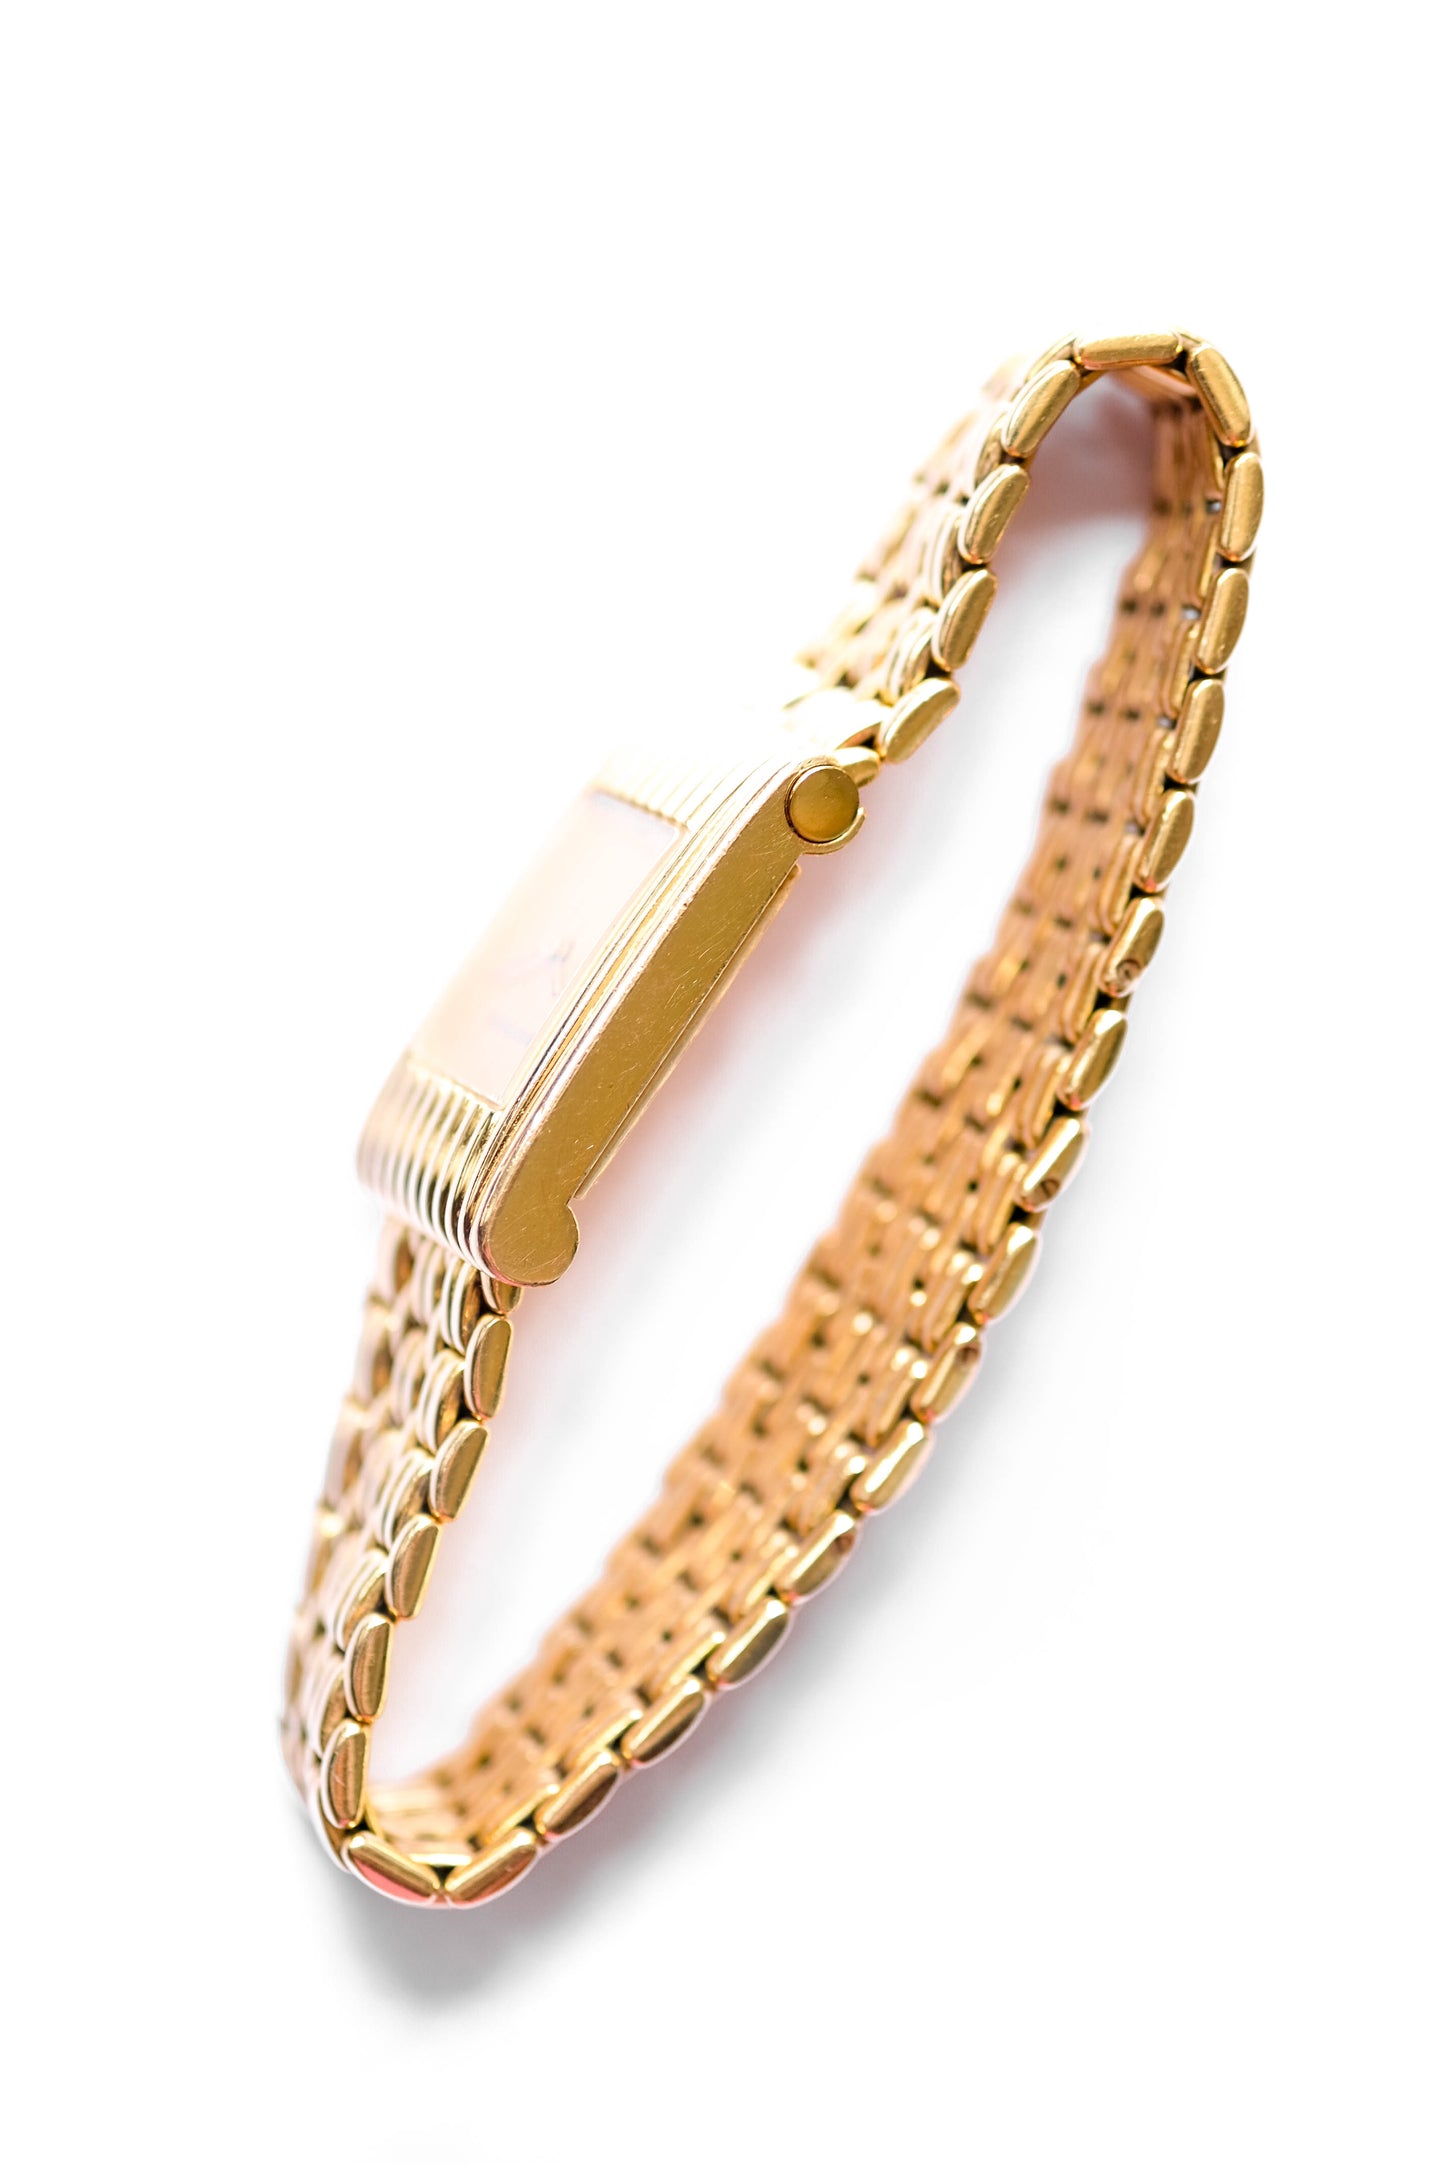 Boucheron Reflet Yellow Gold on bracelet